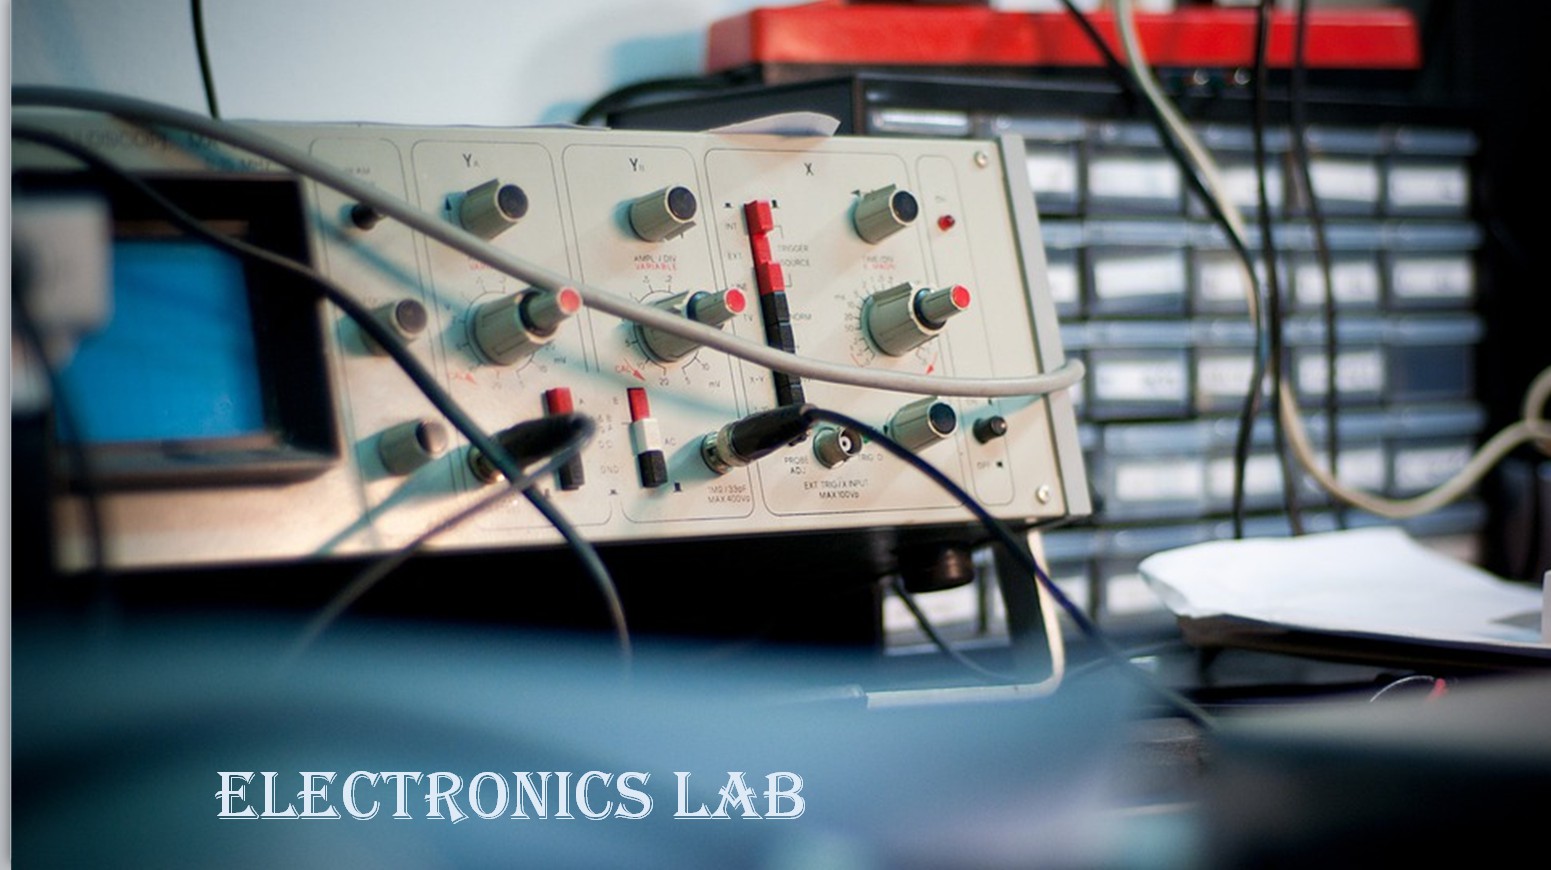 Electronics lab 01